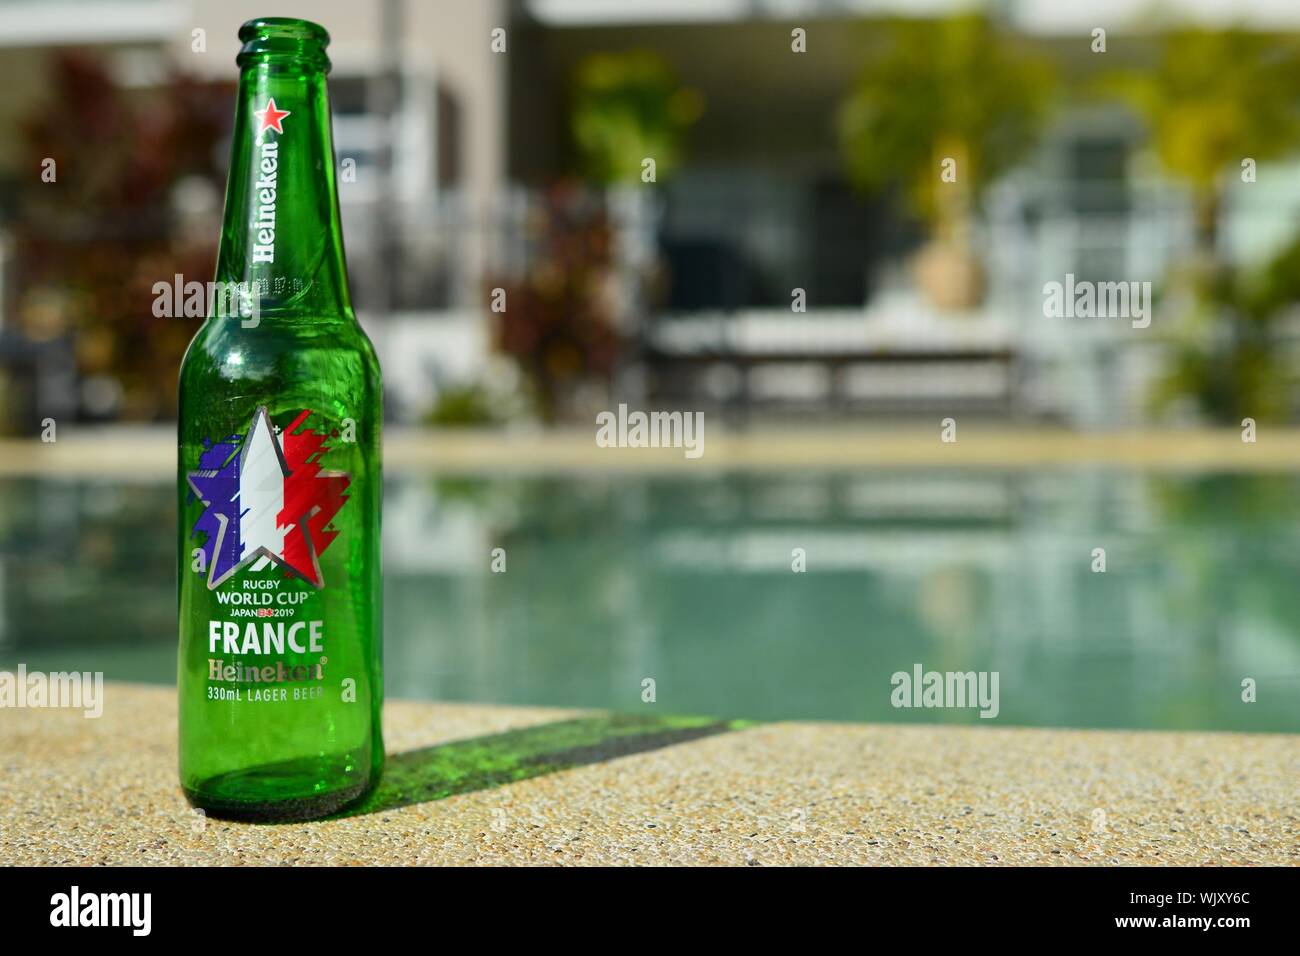 France, Heineken 2019 Japan Rugby world cup beer bottle Stock Photo